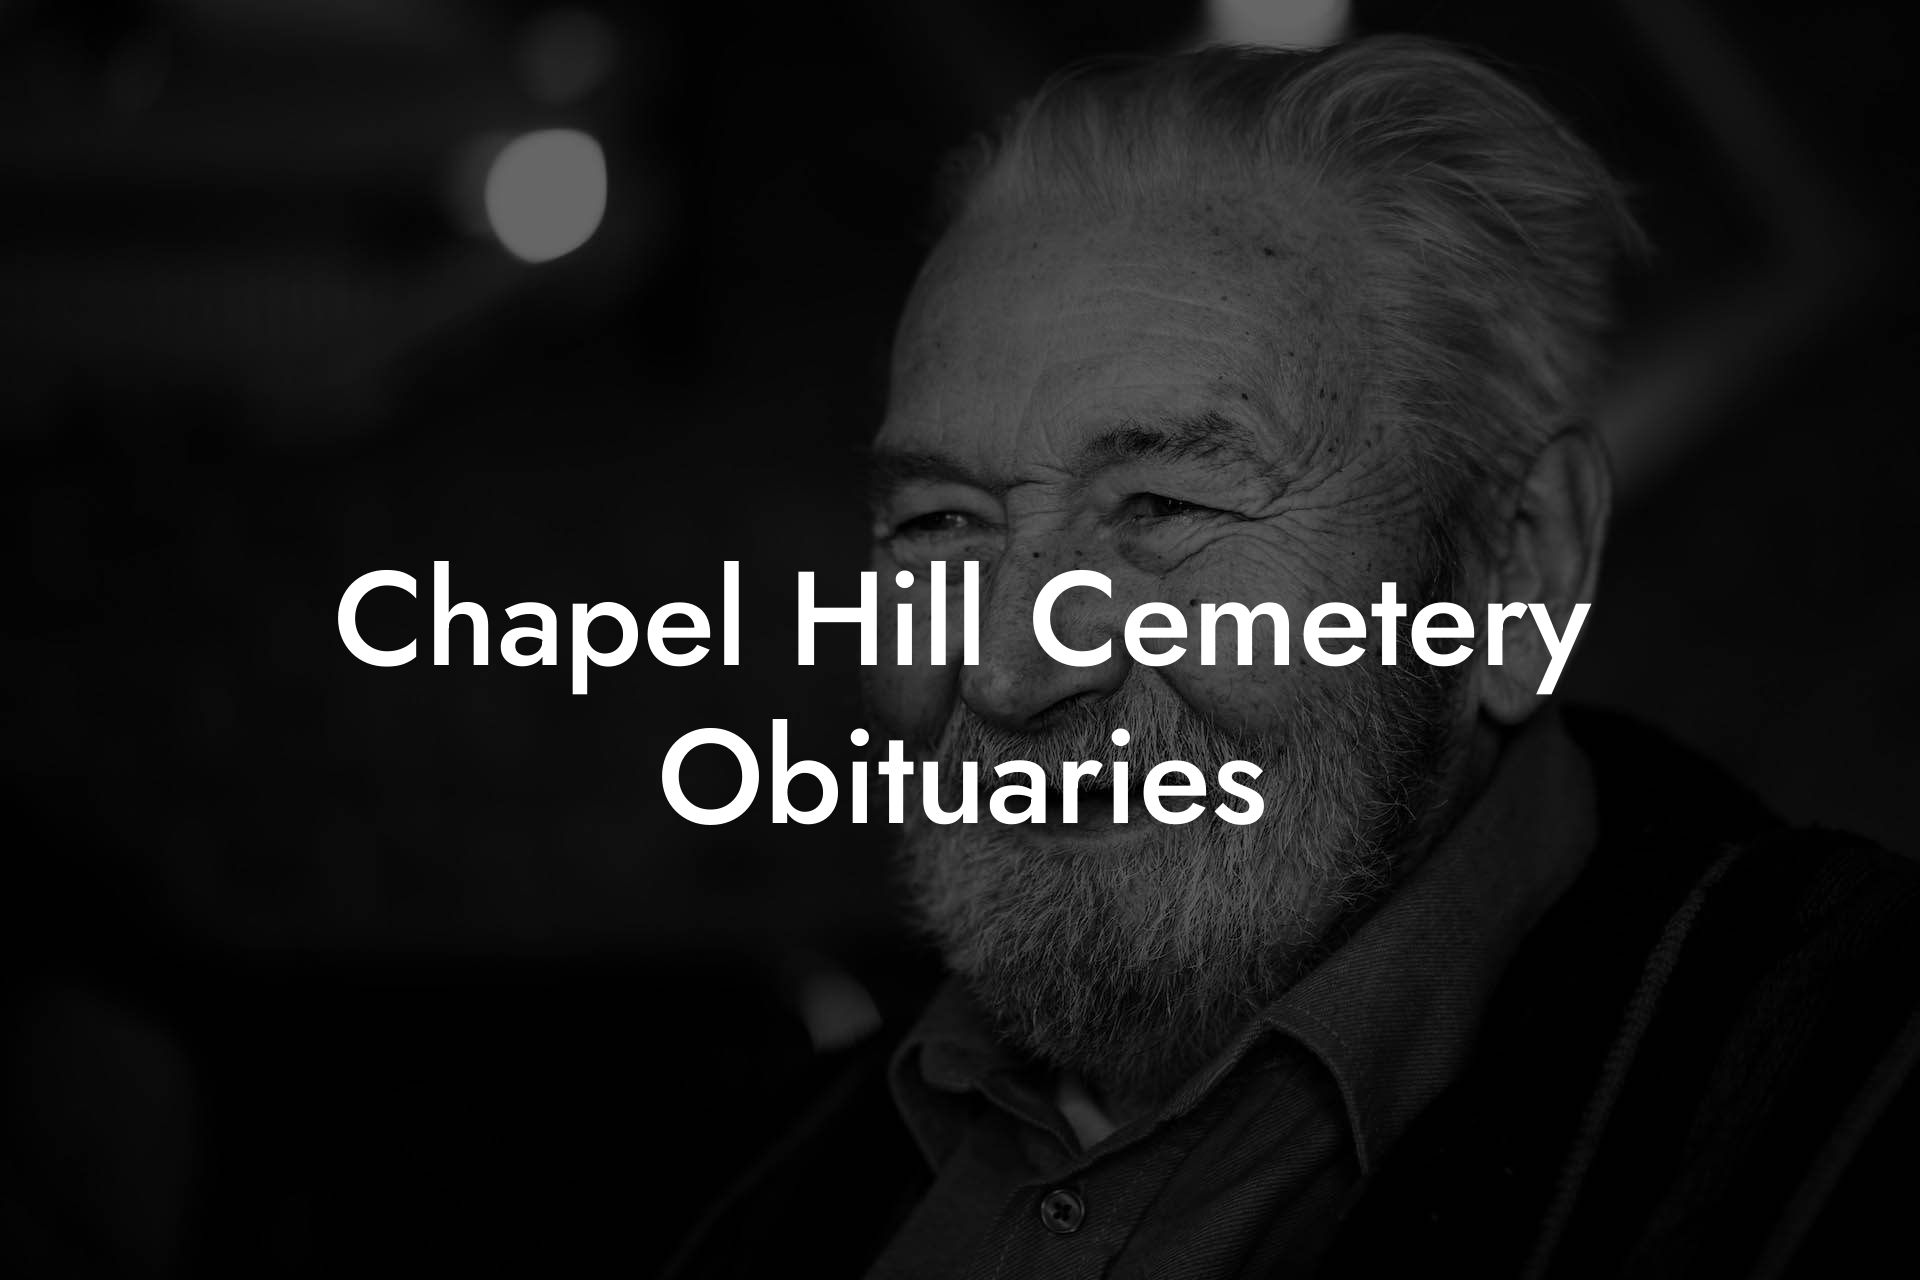 Chapel Hill Cemetery Obituaries